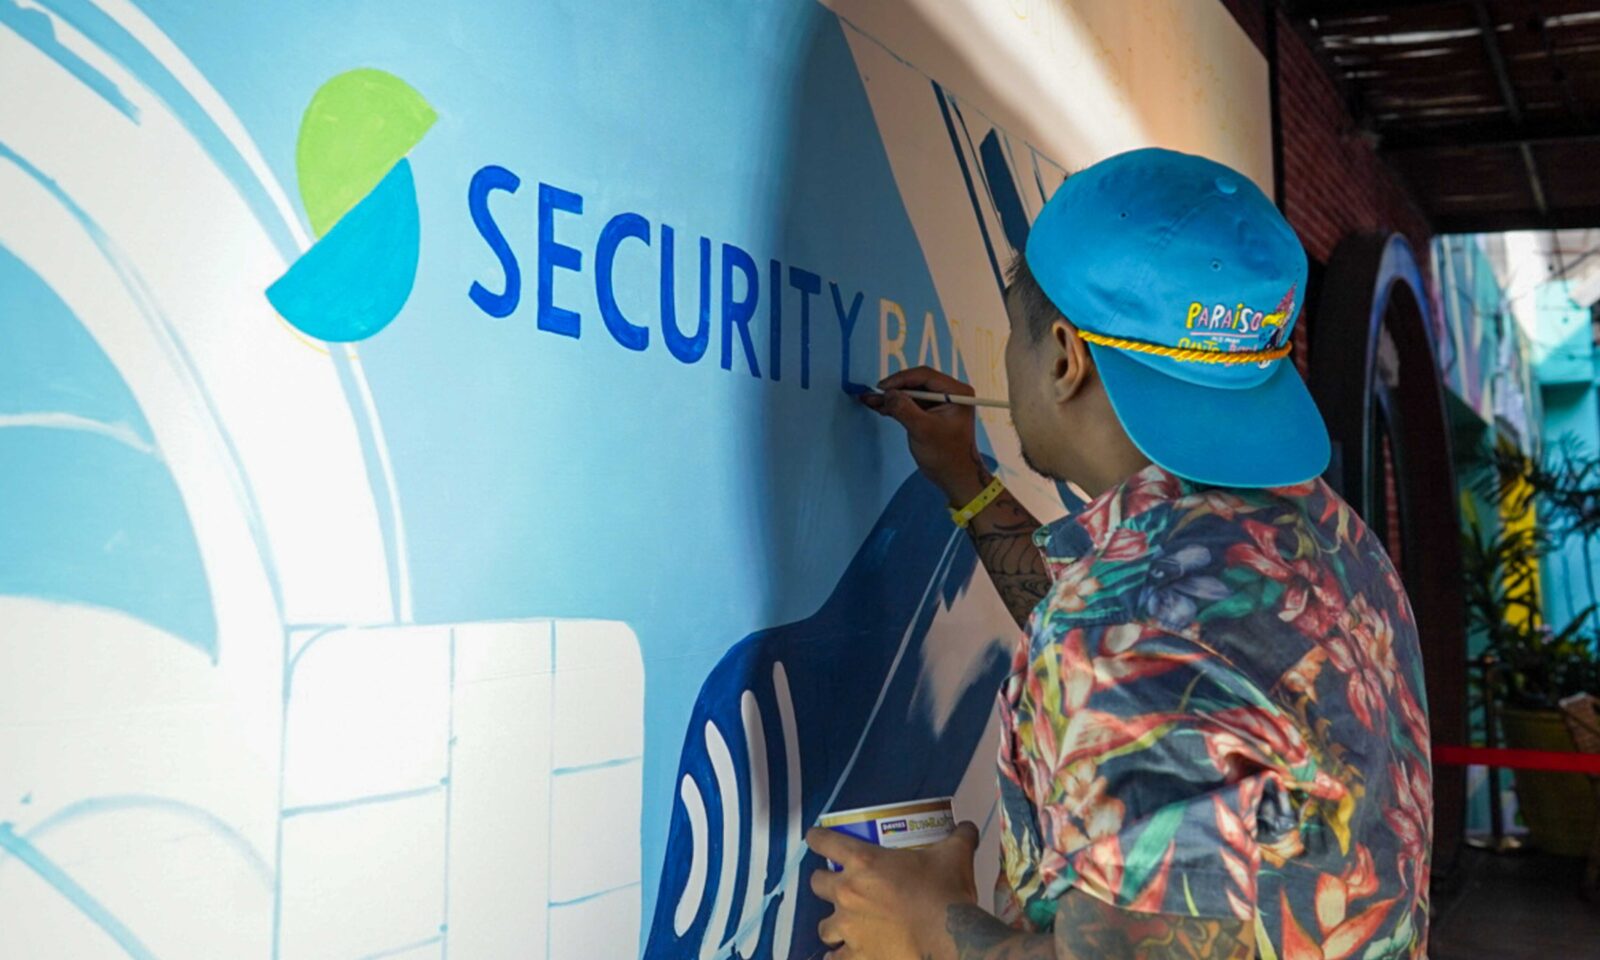 Security bank graffiti wave mastercard